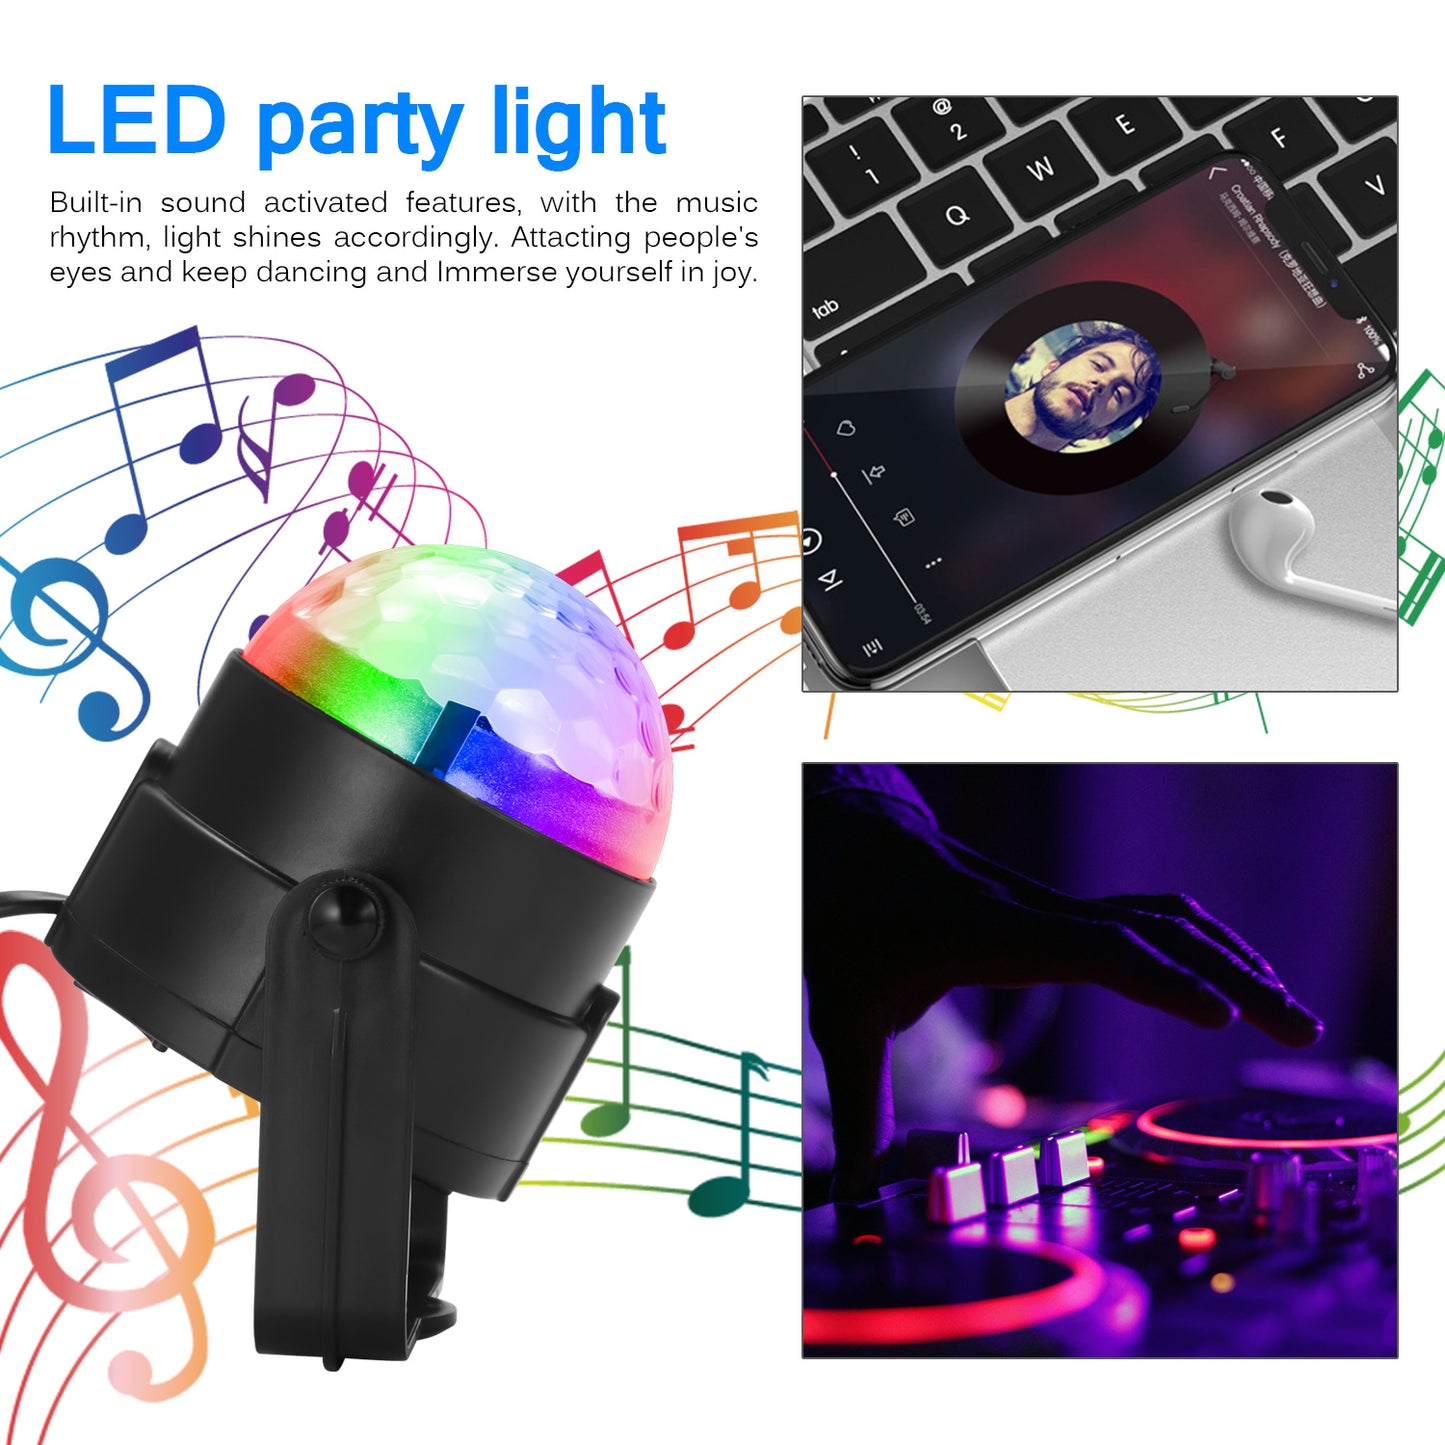 LED RGB Magic Light with Remote Control